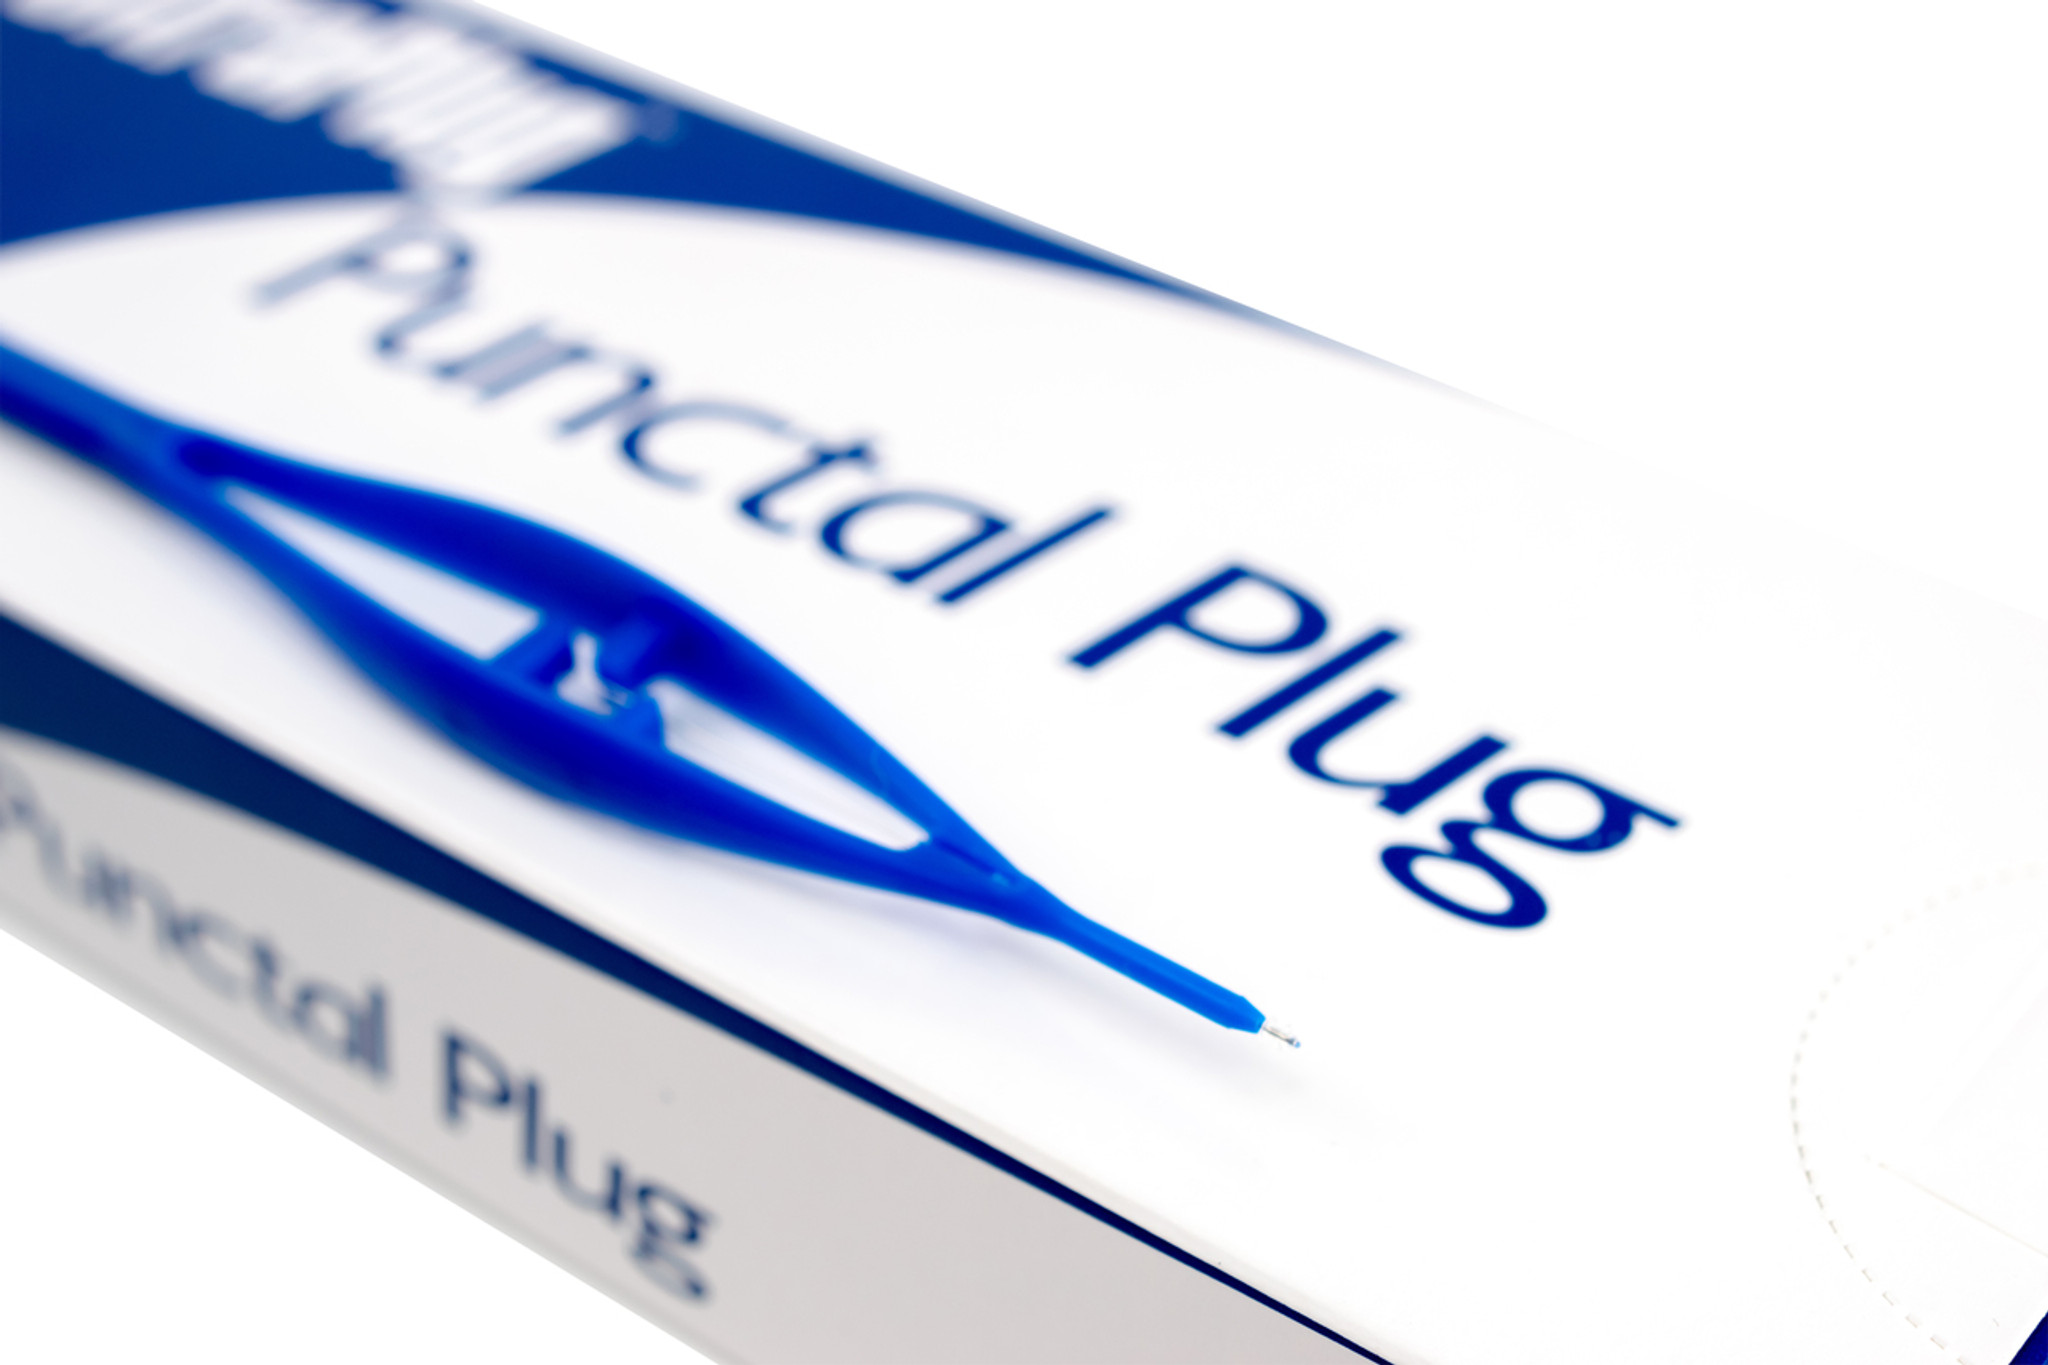 OASIS SOFT PLUG® Silicone Punctal Plugs - Box of 6